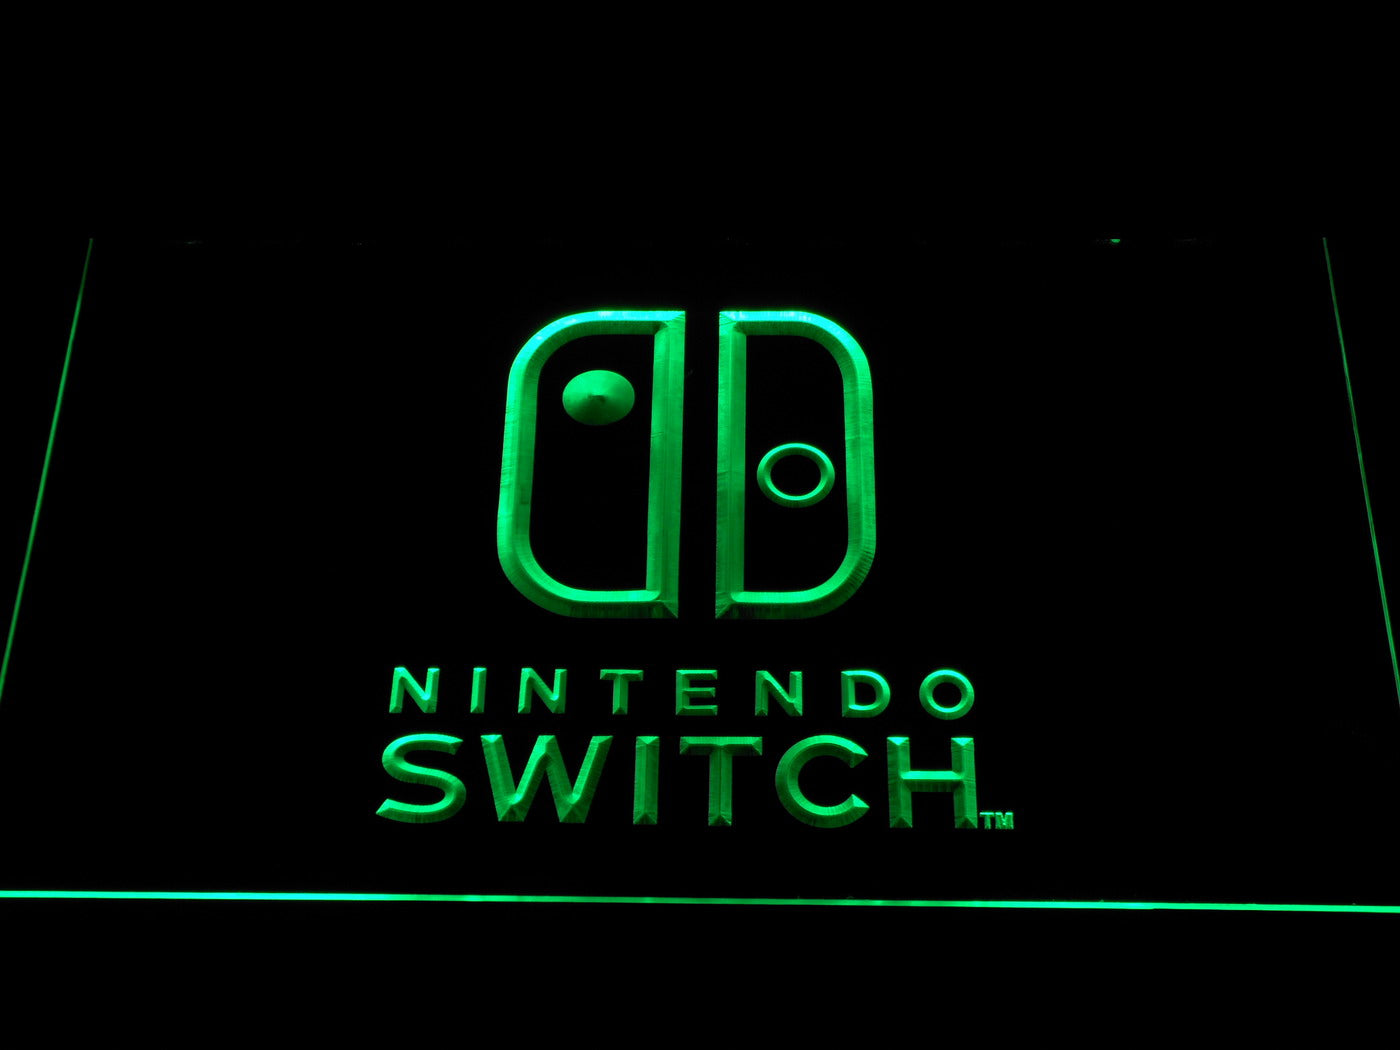 Nintendo Switch Neon Light LED Sign